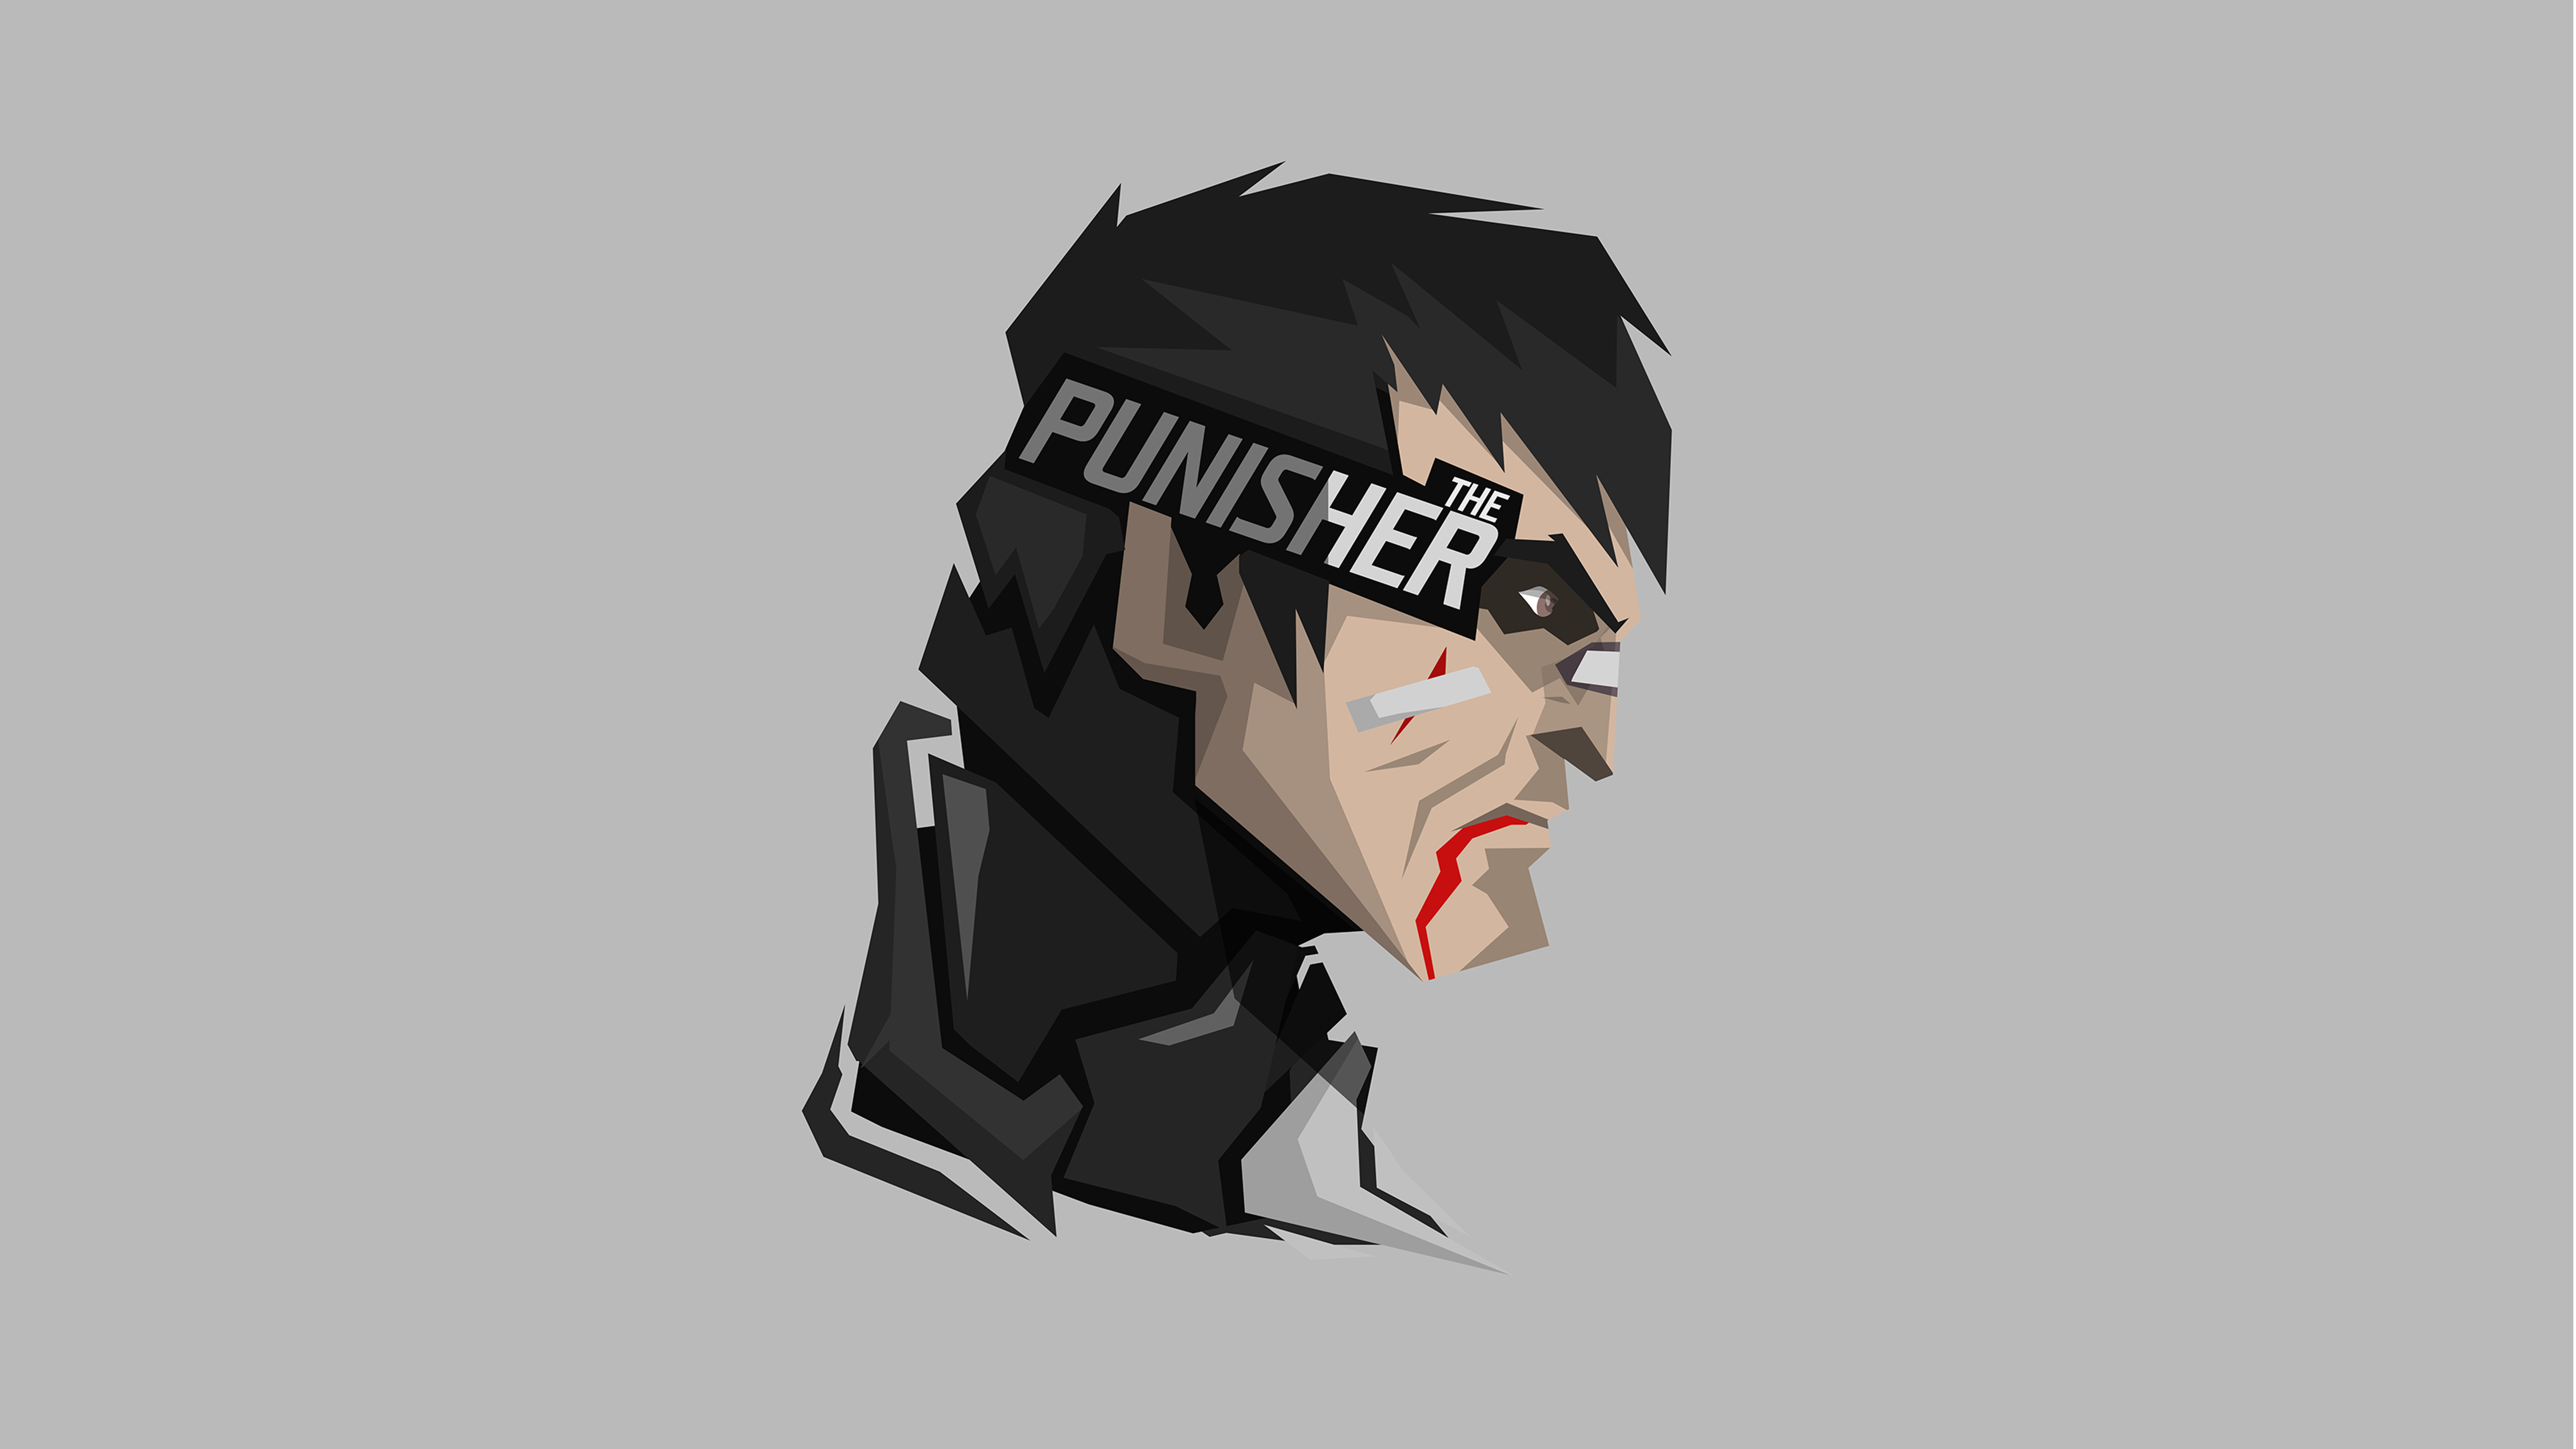 Punisher 7680x4320